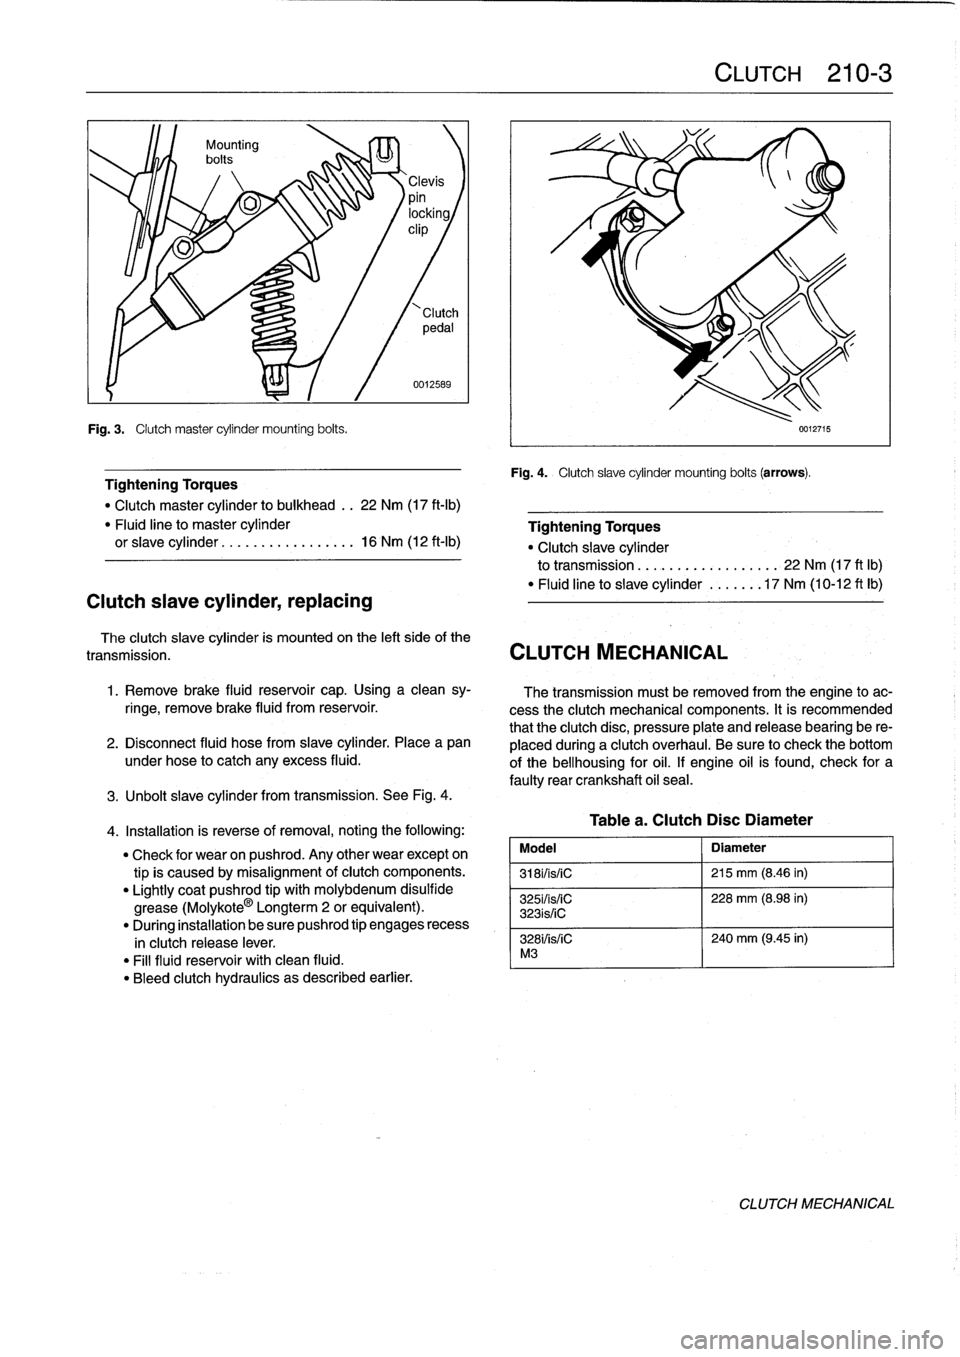 BMW 328i 1998 E36 Workshop Manual Fig
.
3
.

	

Clutch
master
cylinder
mounting
bolts
.

Clutch
slave
cylinder,
replacing

0012589

Tightening
Torques

"
Clutch
master
cylinder
to
bulkhead
..
22
Nm
(17
ft-Ib)
"
Fluid
line
to
master
cy